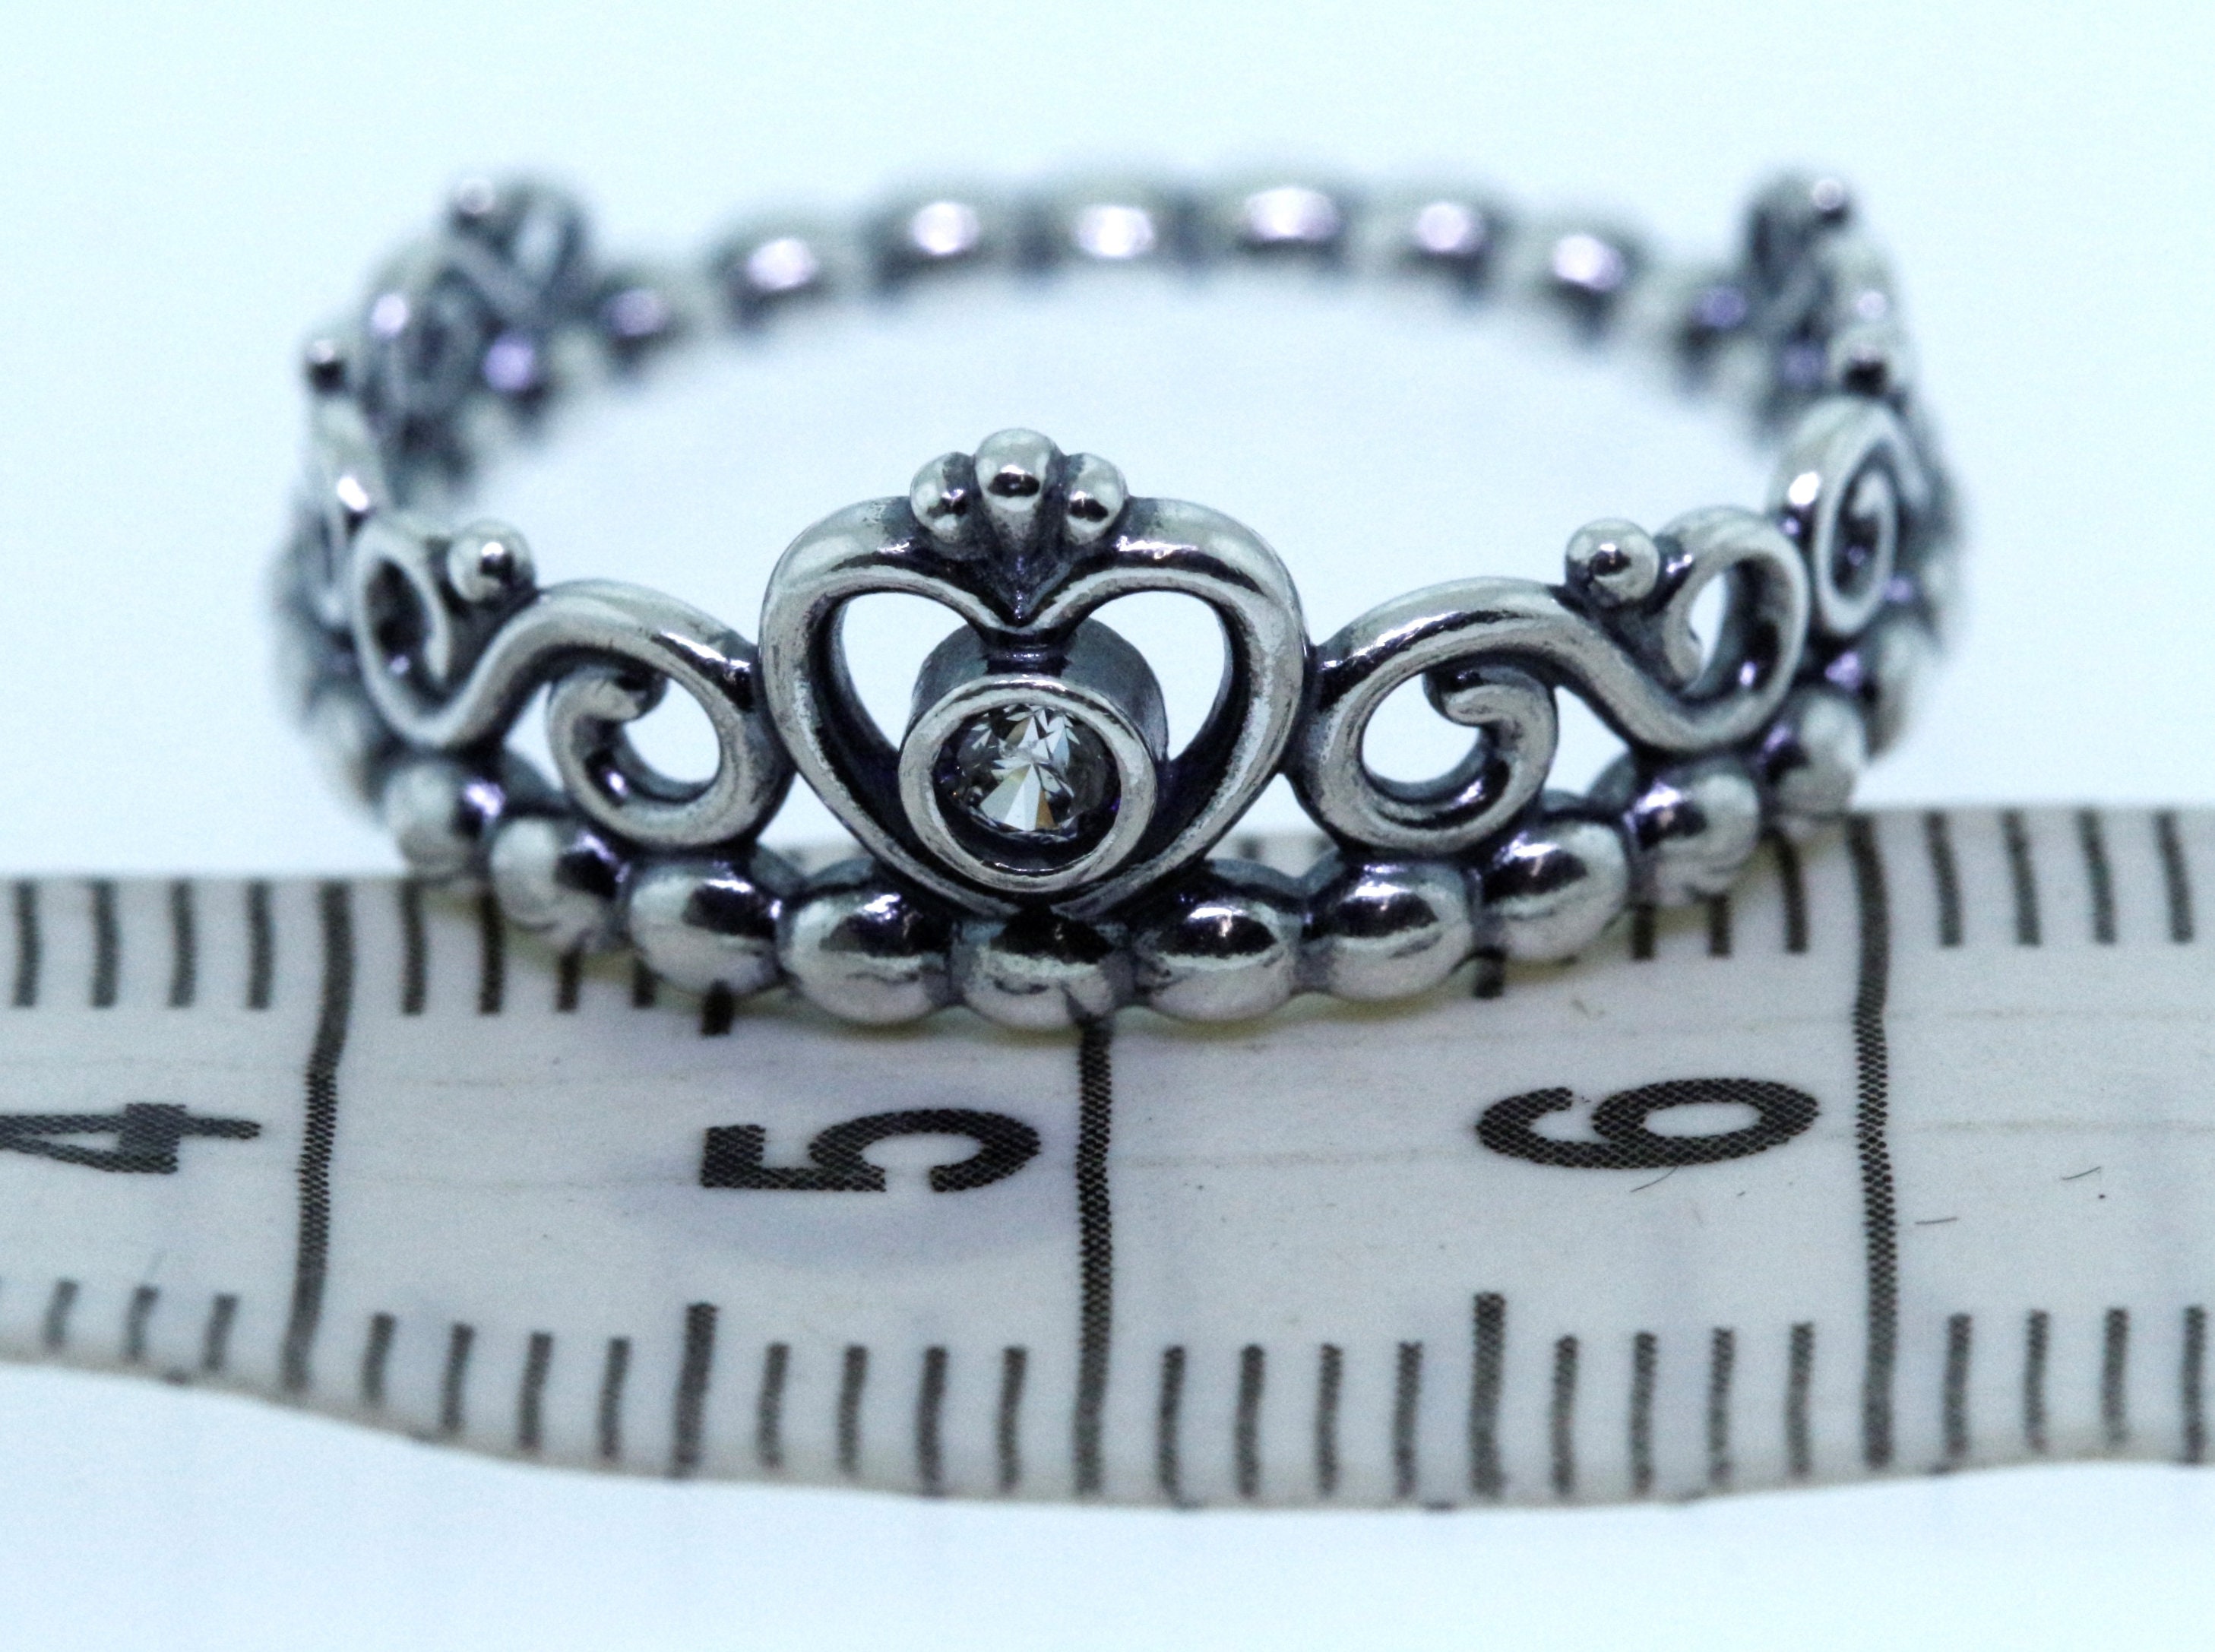 bought this tiara ring at the open market :) : r/mildlyinteresting